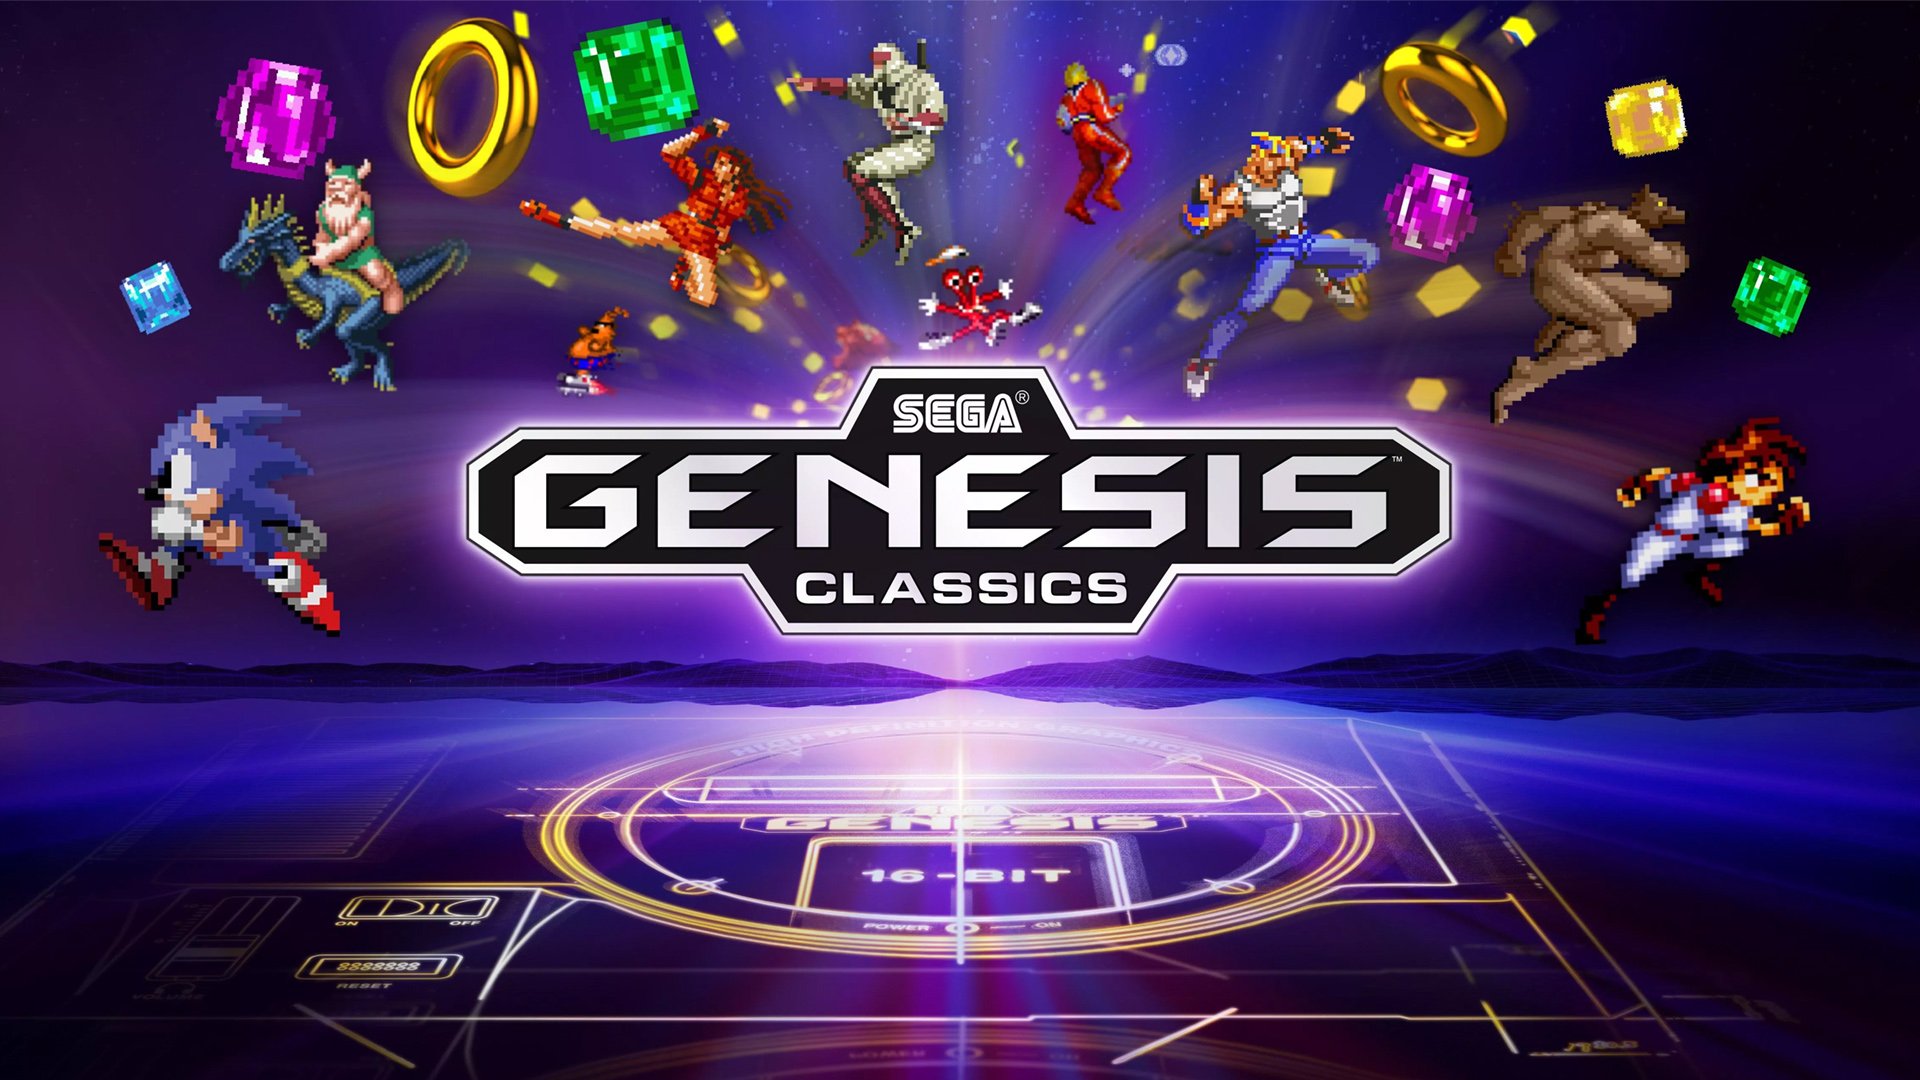 download sega genesis classics switch game list for free